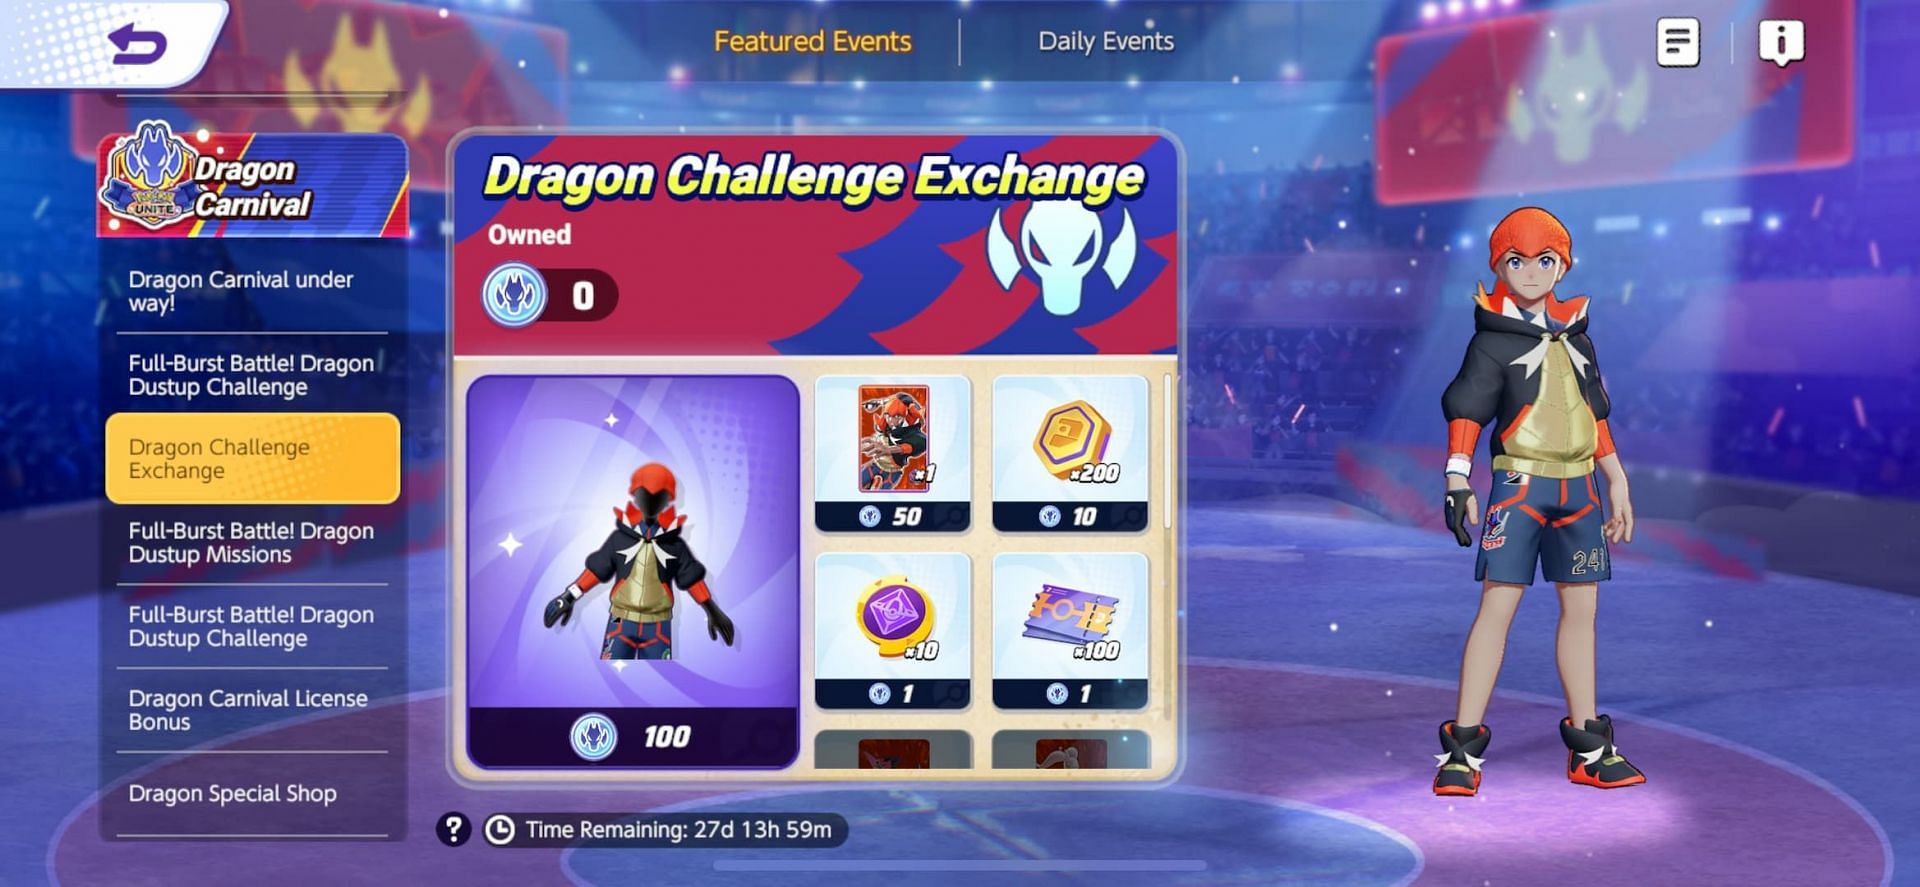 Dragon Challenge Exchange screen (Image via The Pokemon Company)